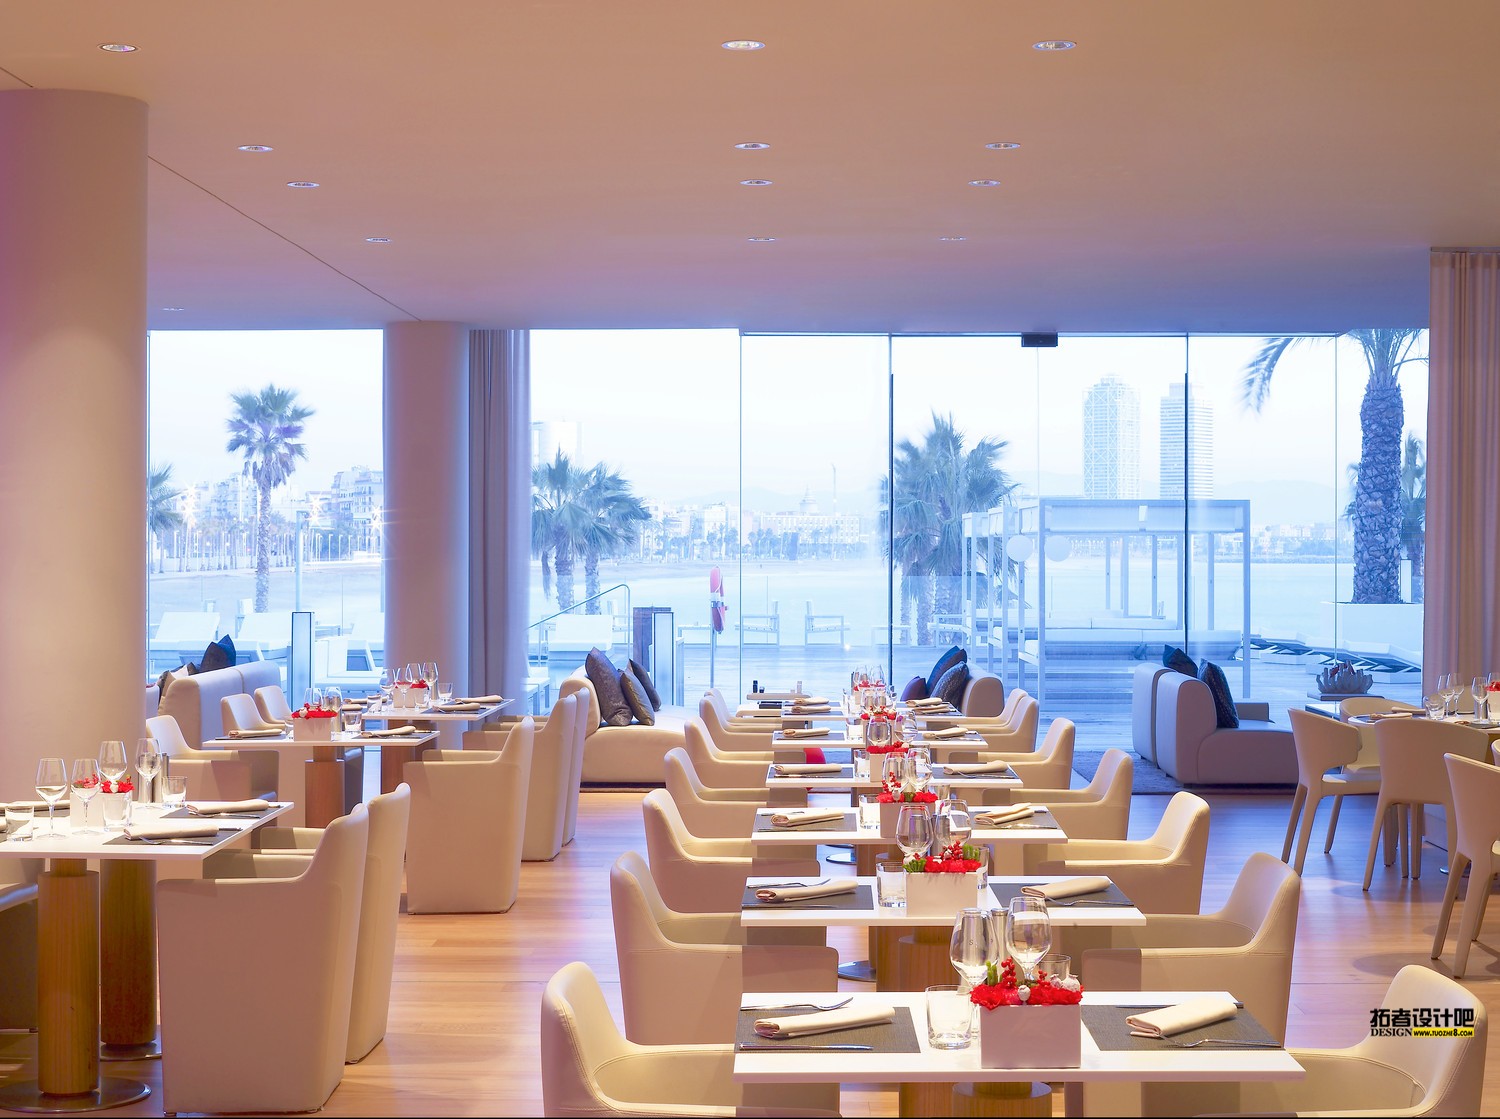 6)W BarcelonaWAVE Restaurant With View Over The Mediterranean Ĕz.jpg